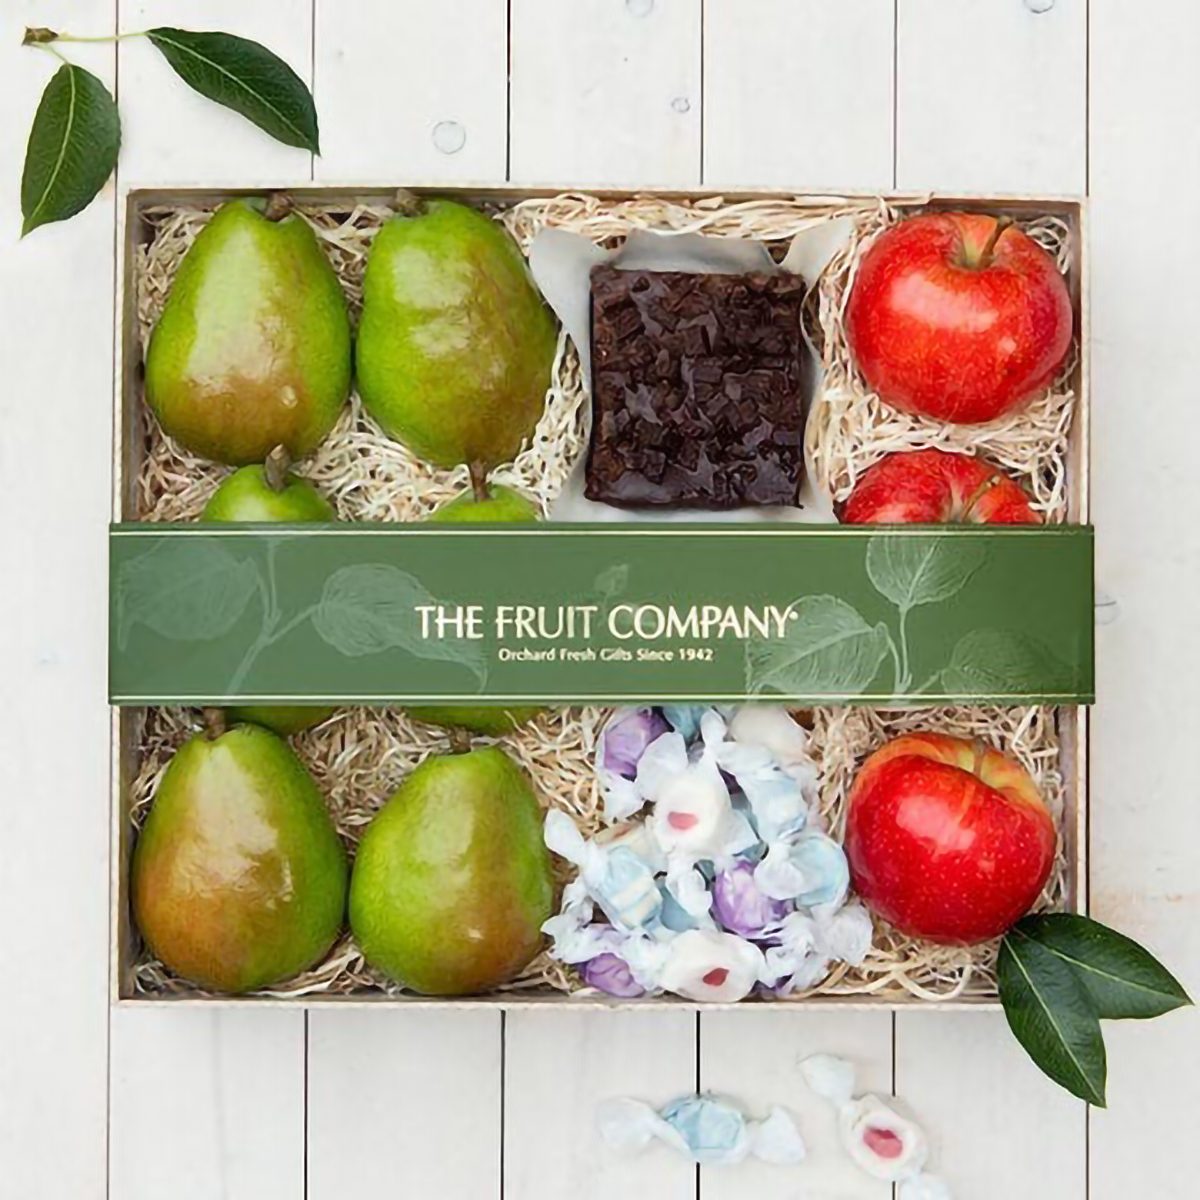 The Fruit Company (@thefruitcompany) • Instagram photos and videos